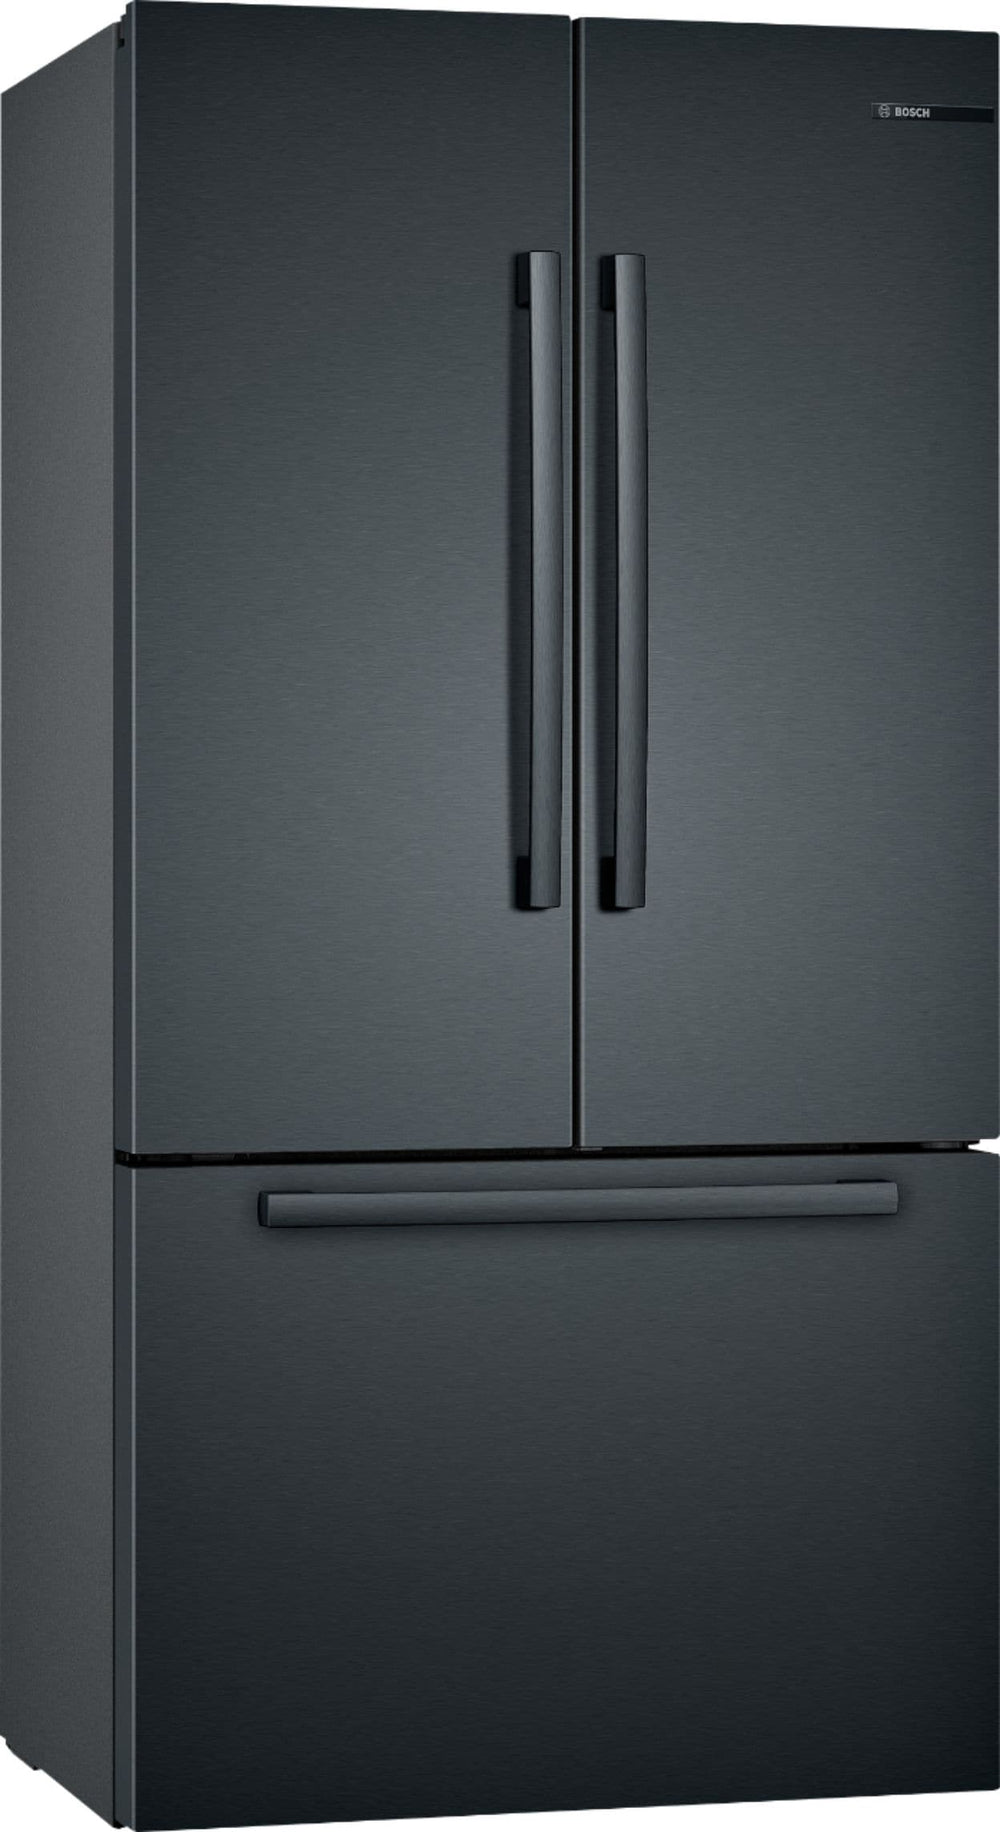 Bosch - 800 Series 21 Cu. Ft. French Door Counter-Depth Smart Refrigerator - Black stainless steel_1